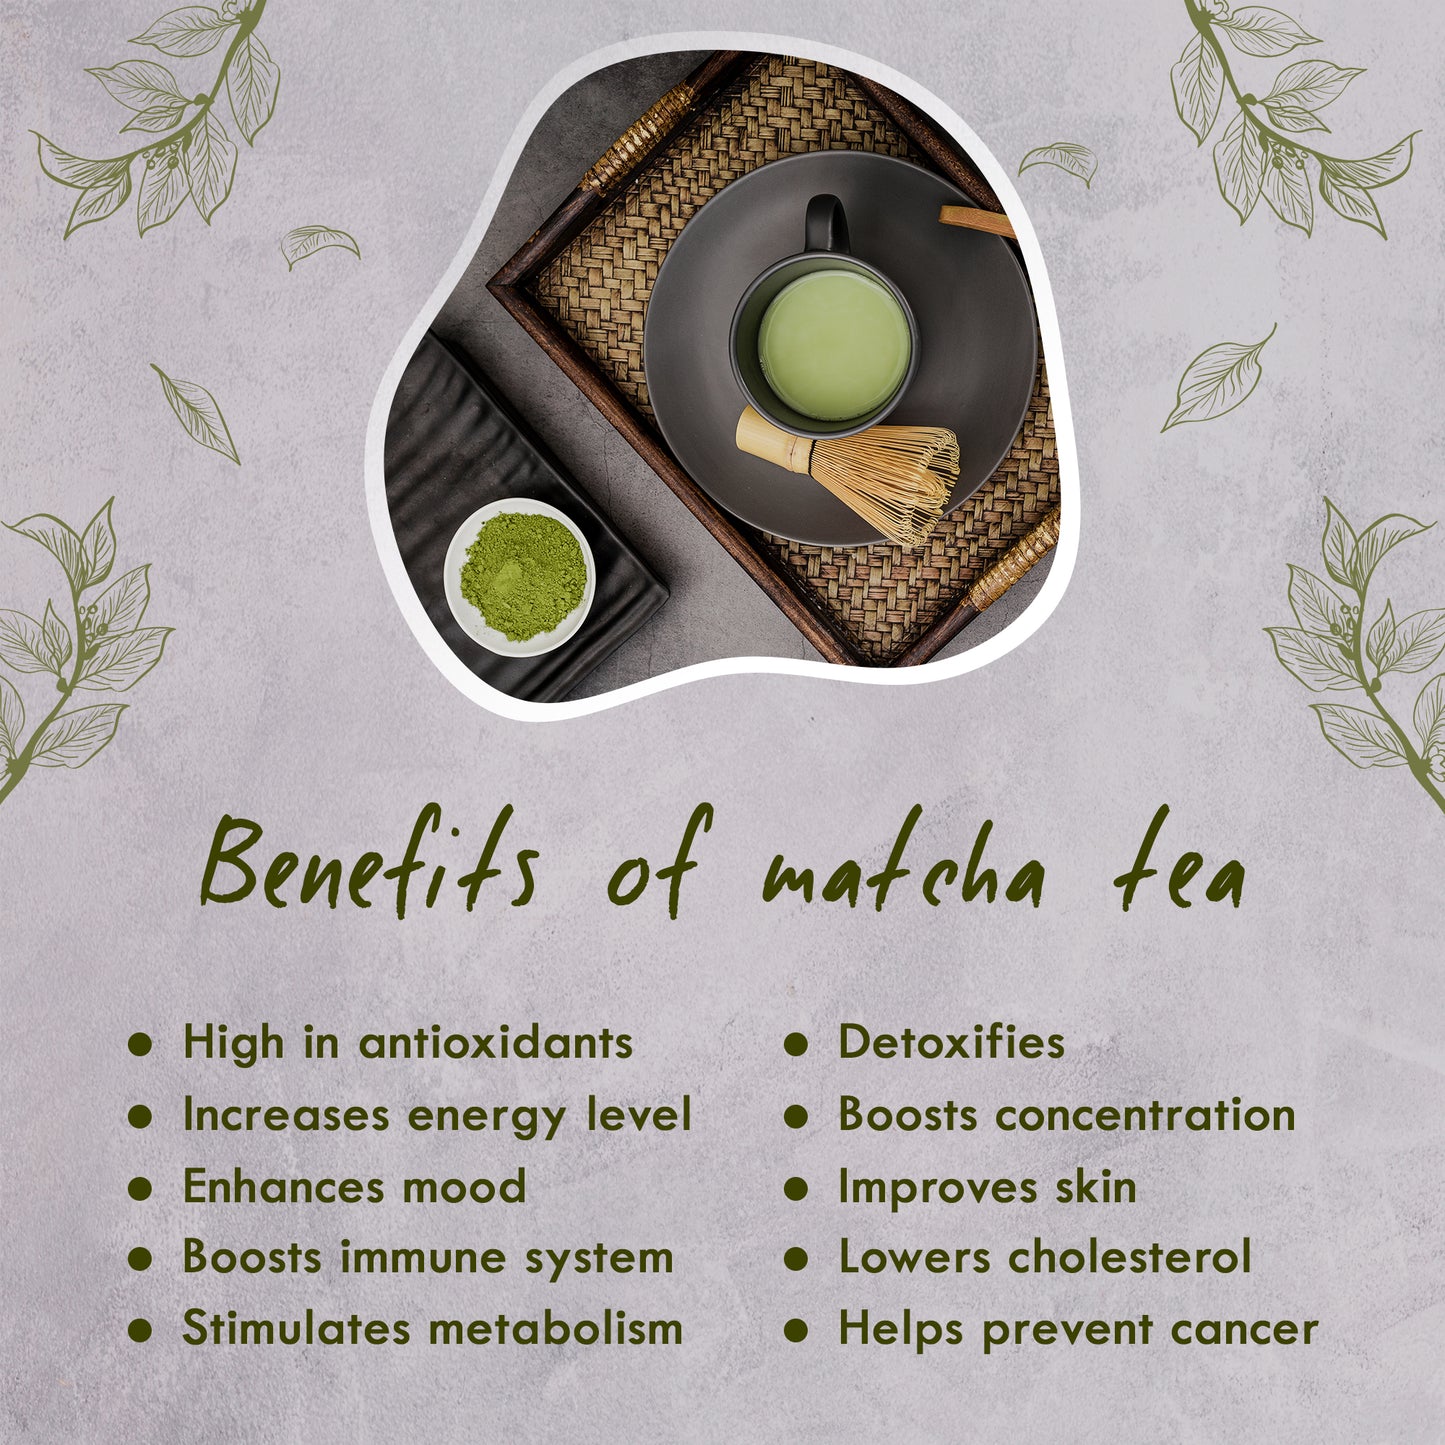 Japanese Matcha Tea : Premium Grade